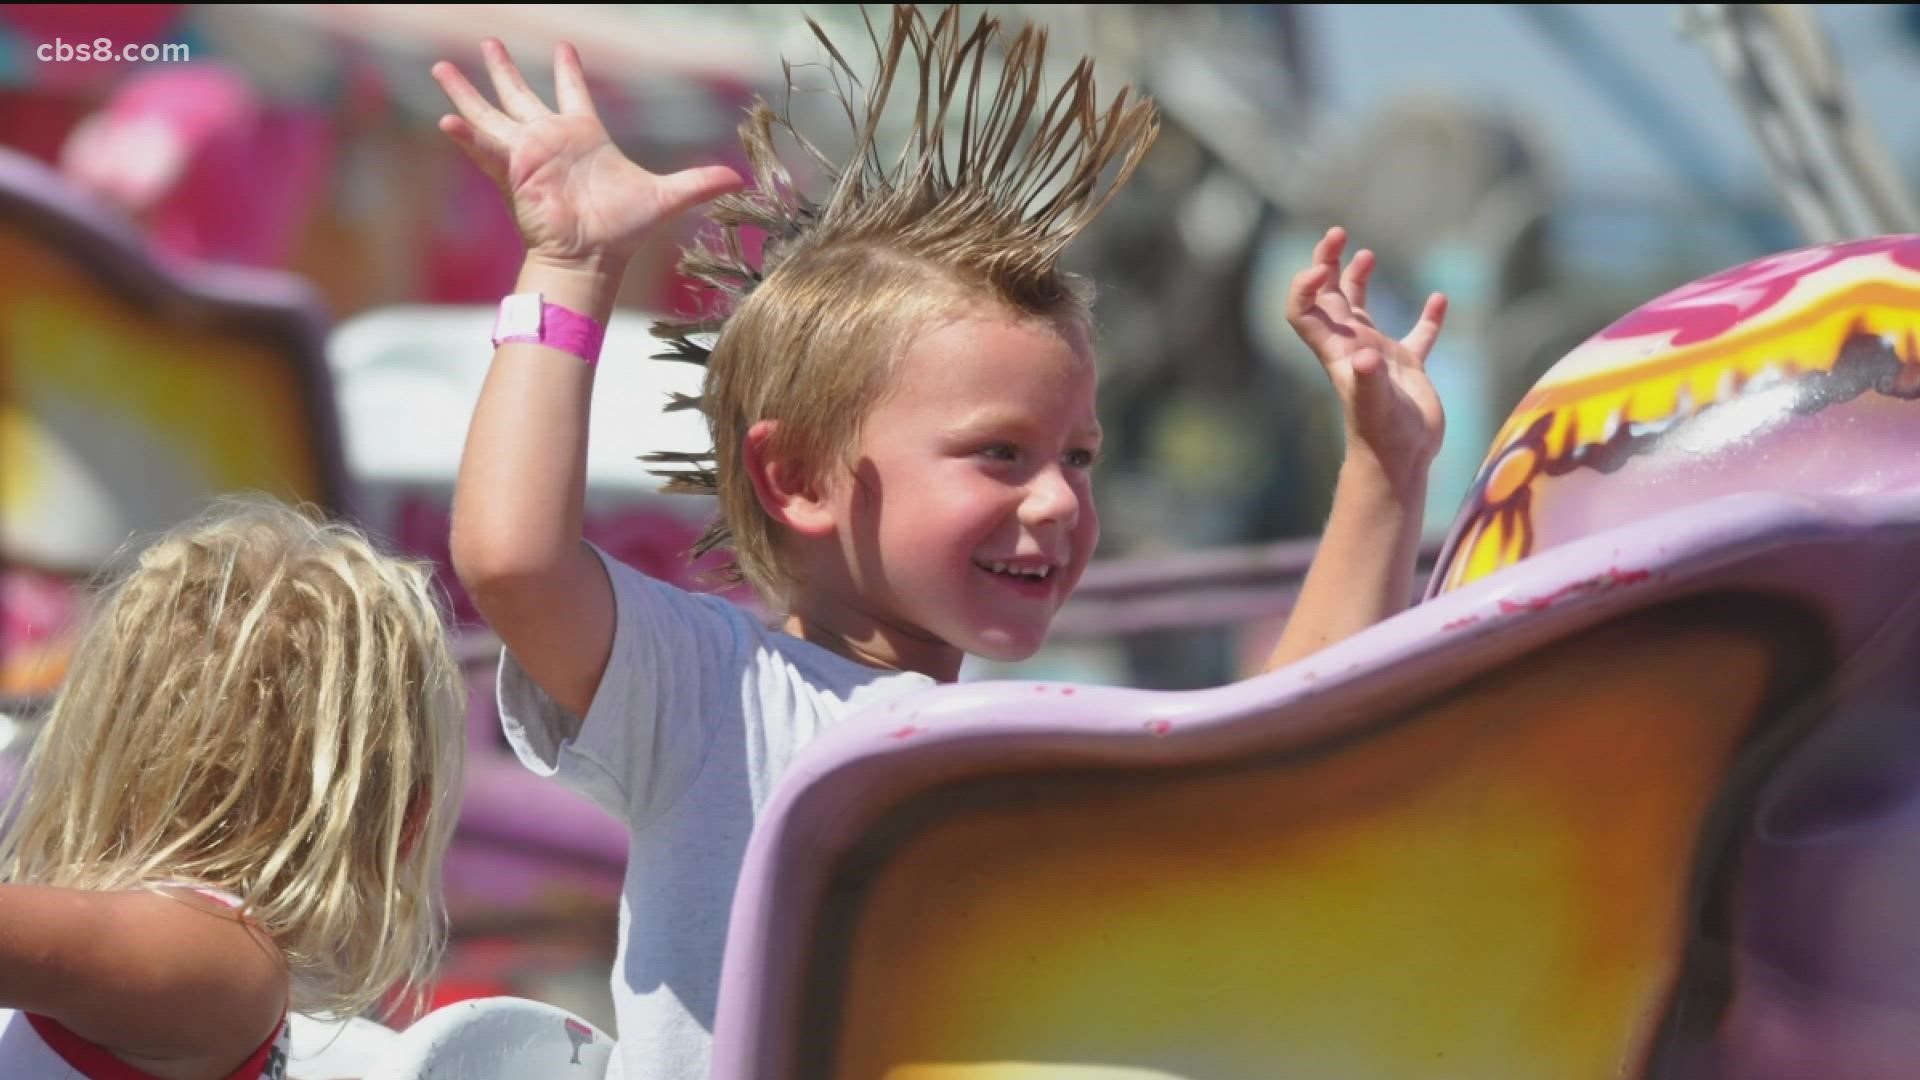 The fair features live music, amusement park rides, barrel racing and a cornhole competition.